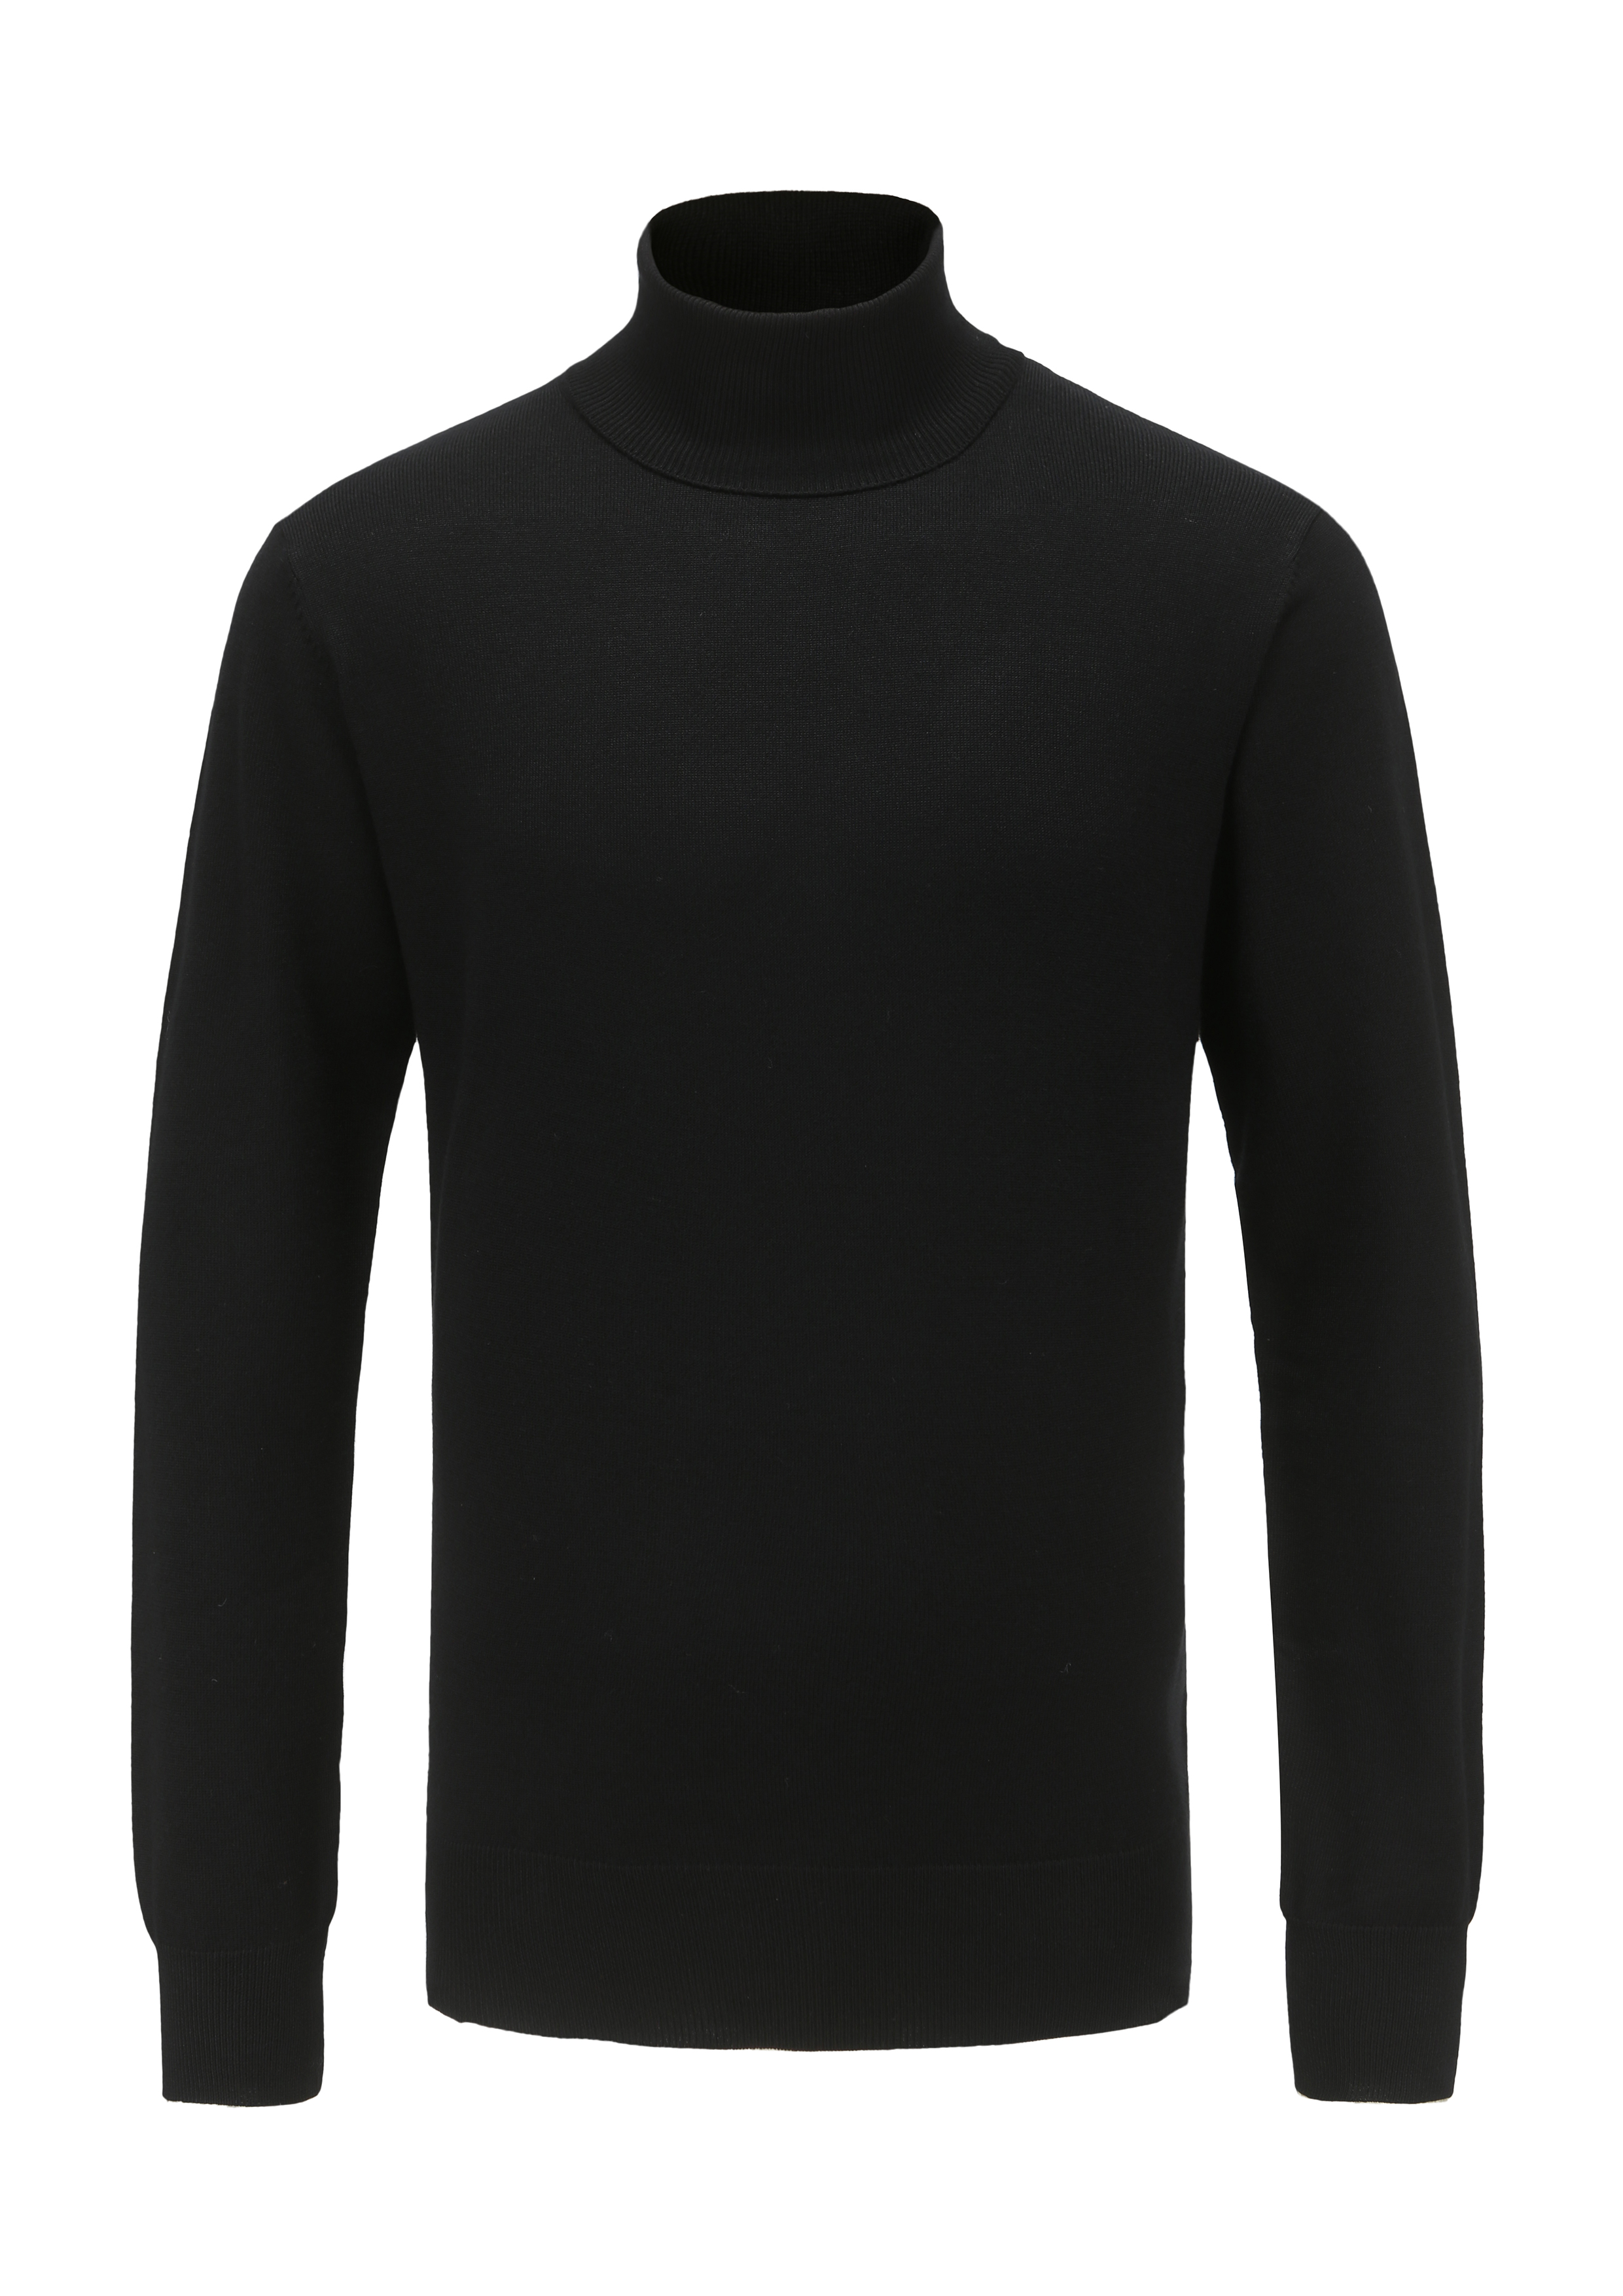 OEM Design Black Haze Knitted Long Sleeve Men's Casual Sweater Crewneck Pullovers Knitswear